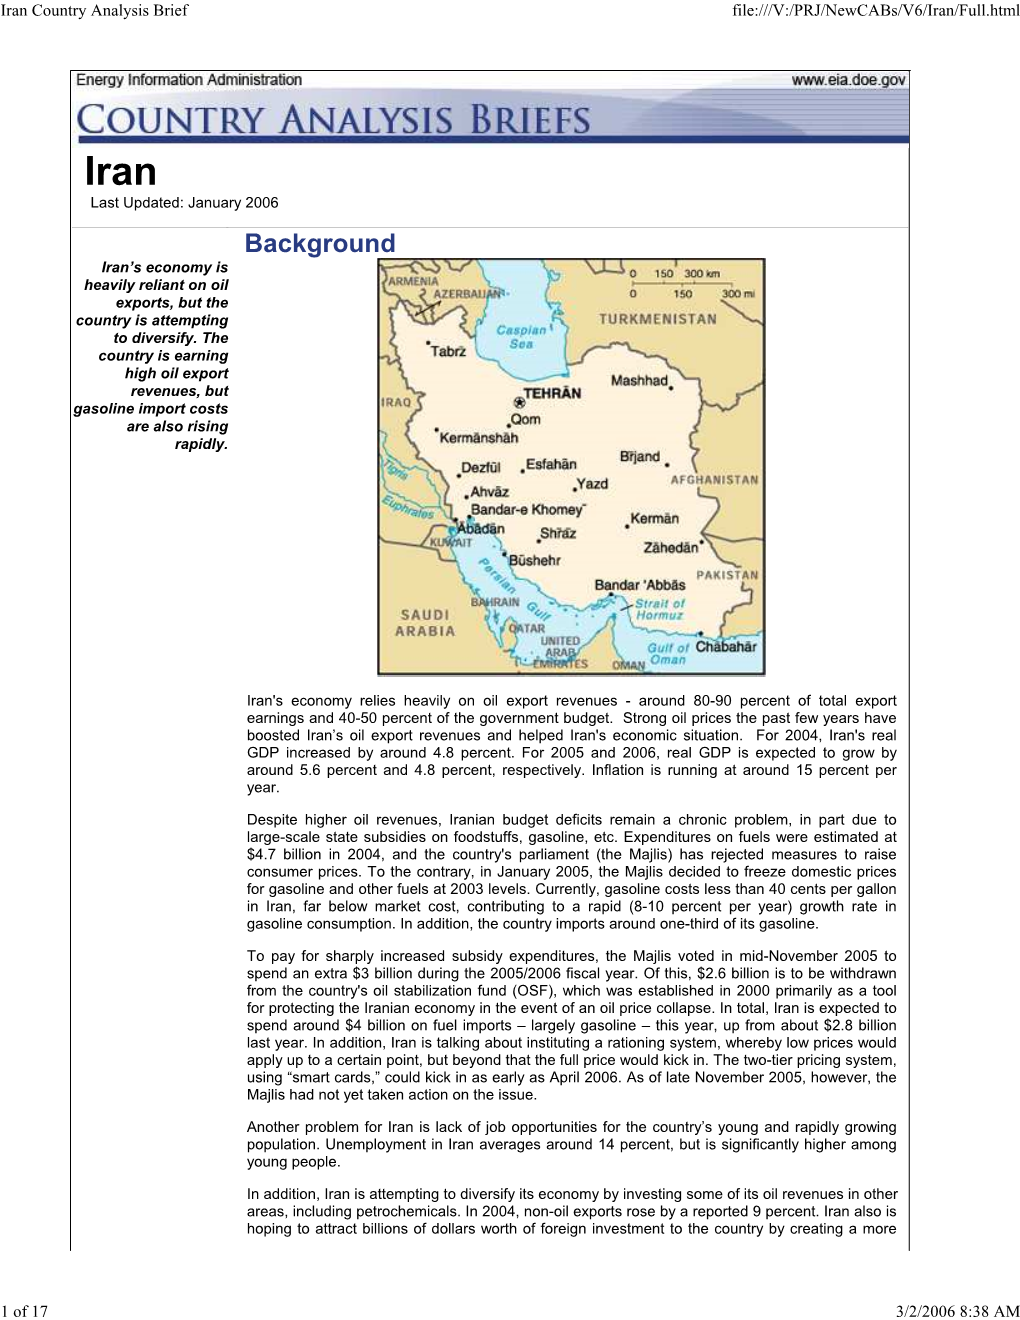 Iran Country Analysis Brief File:///V:/PRJ/Newcabs/V6/Iran/Full.Html